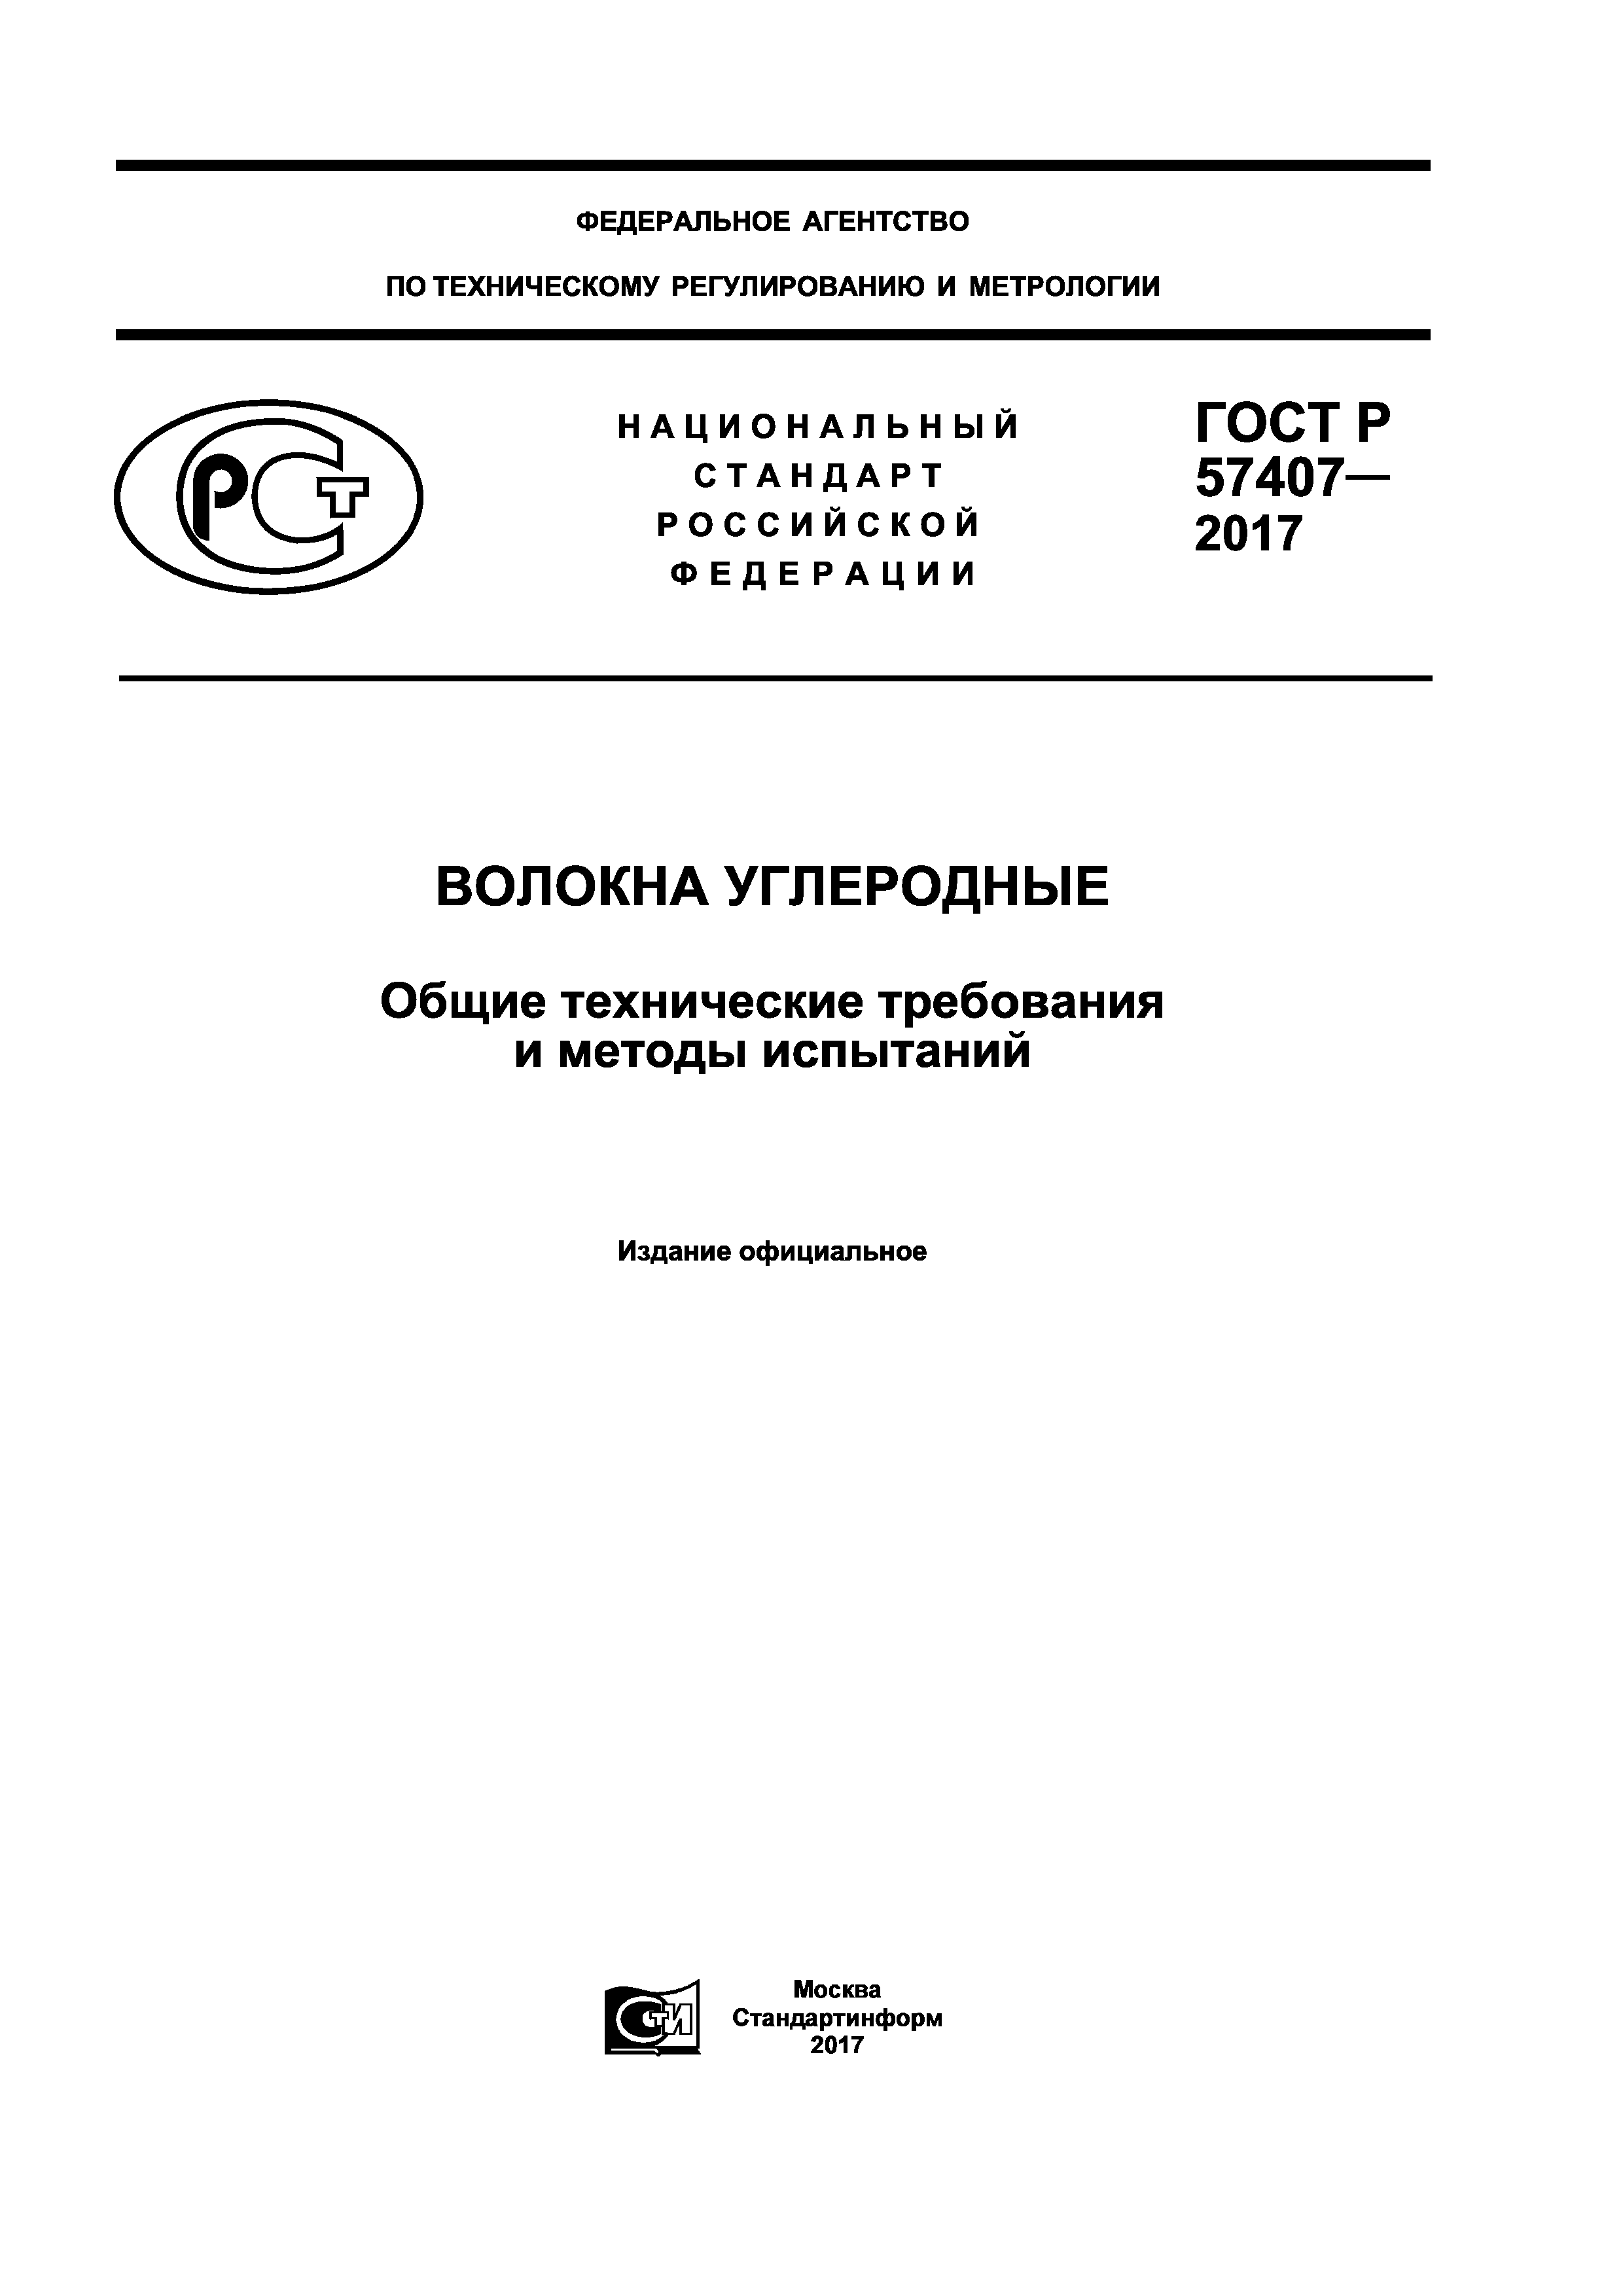 ГОСТ Р 57407-2017